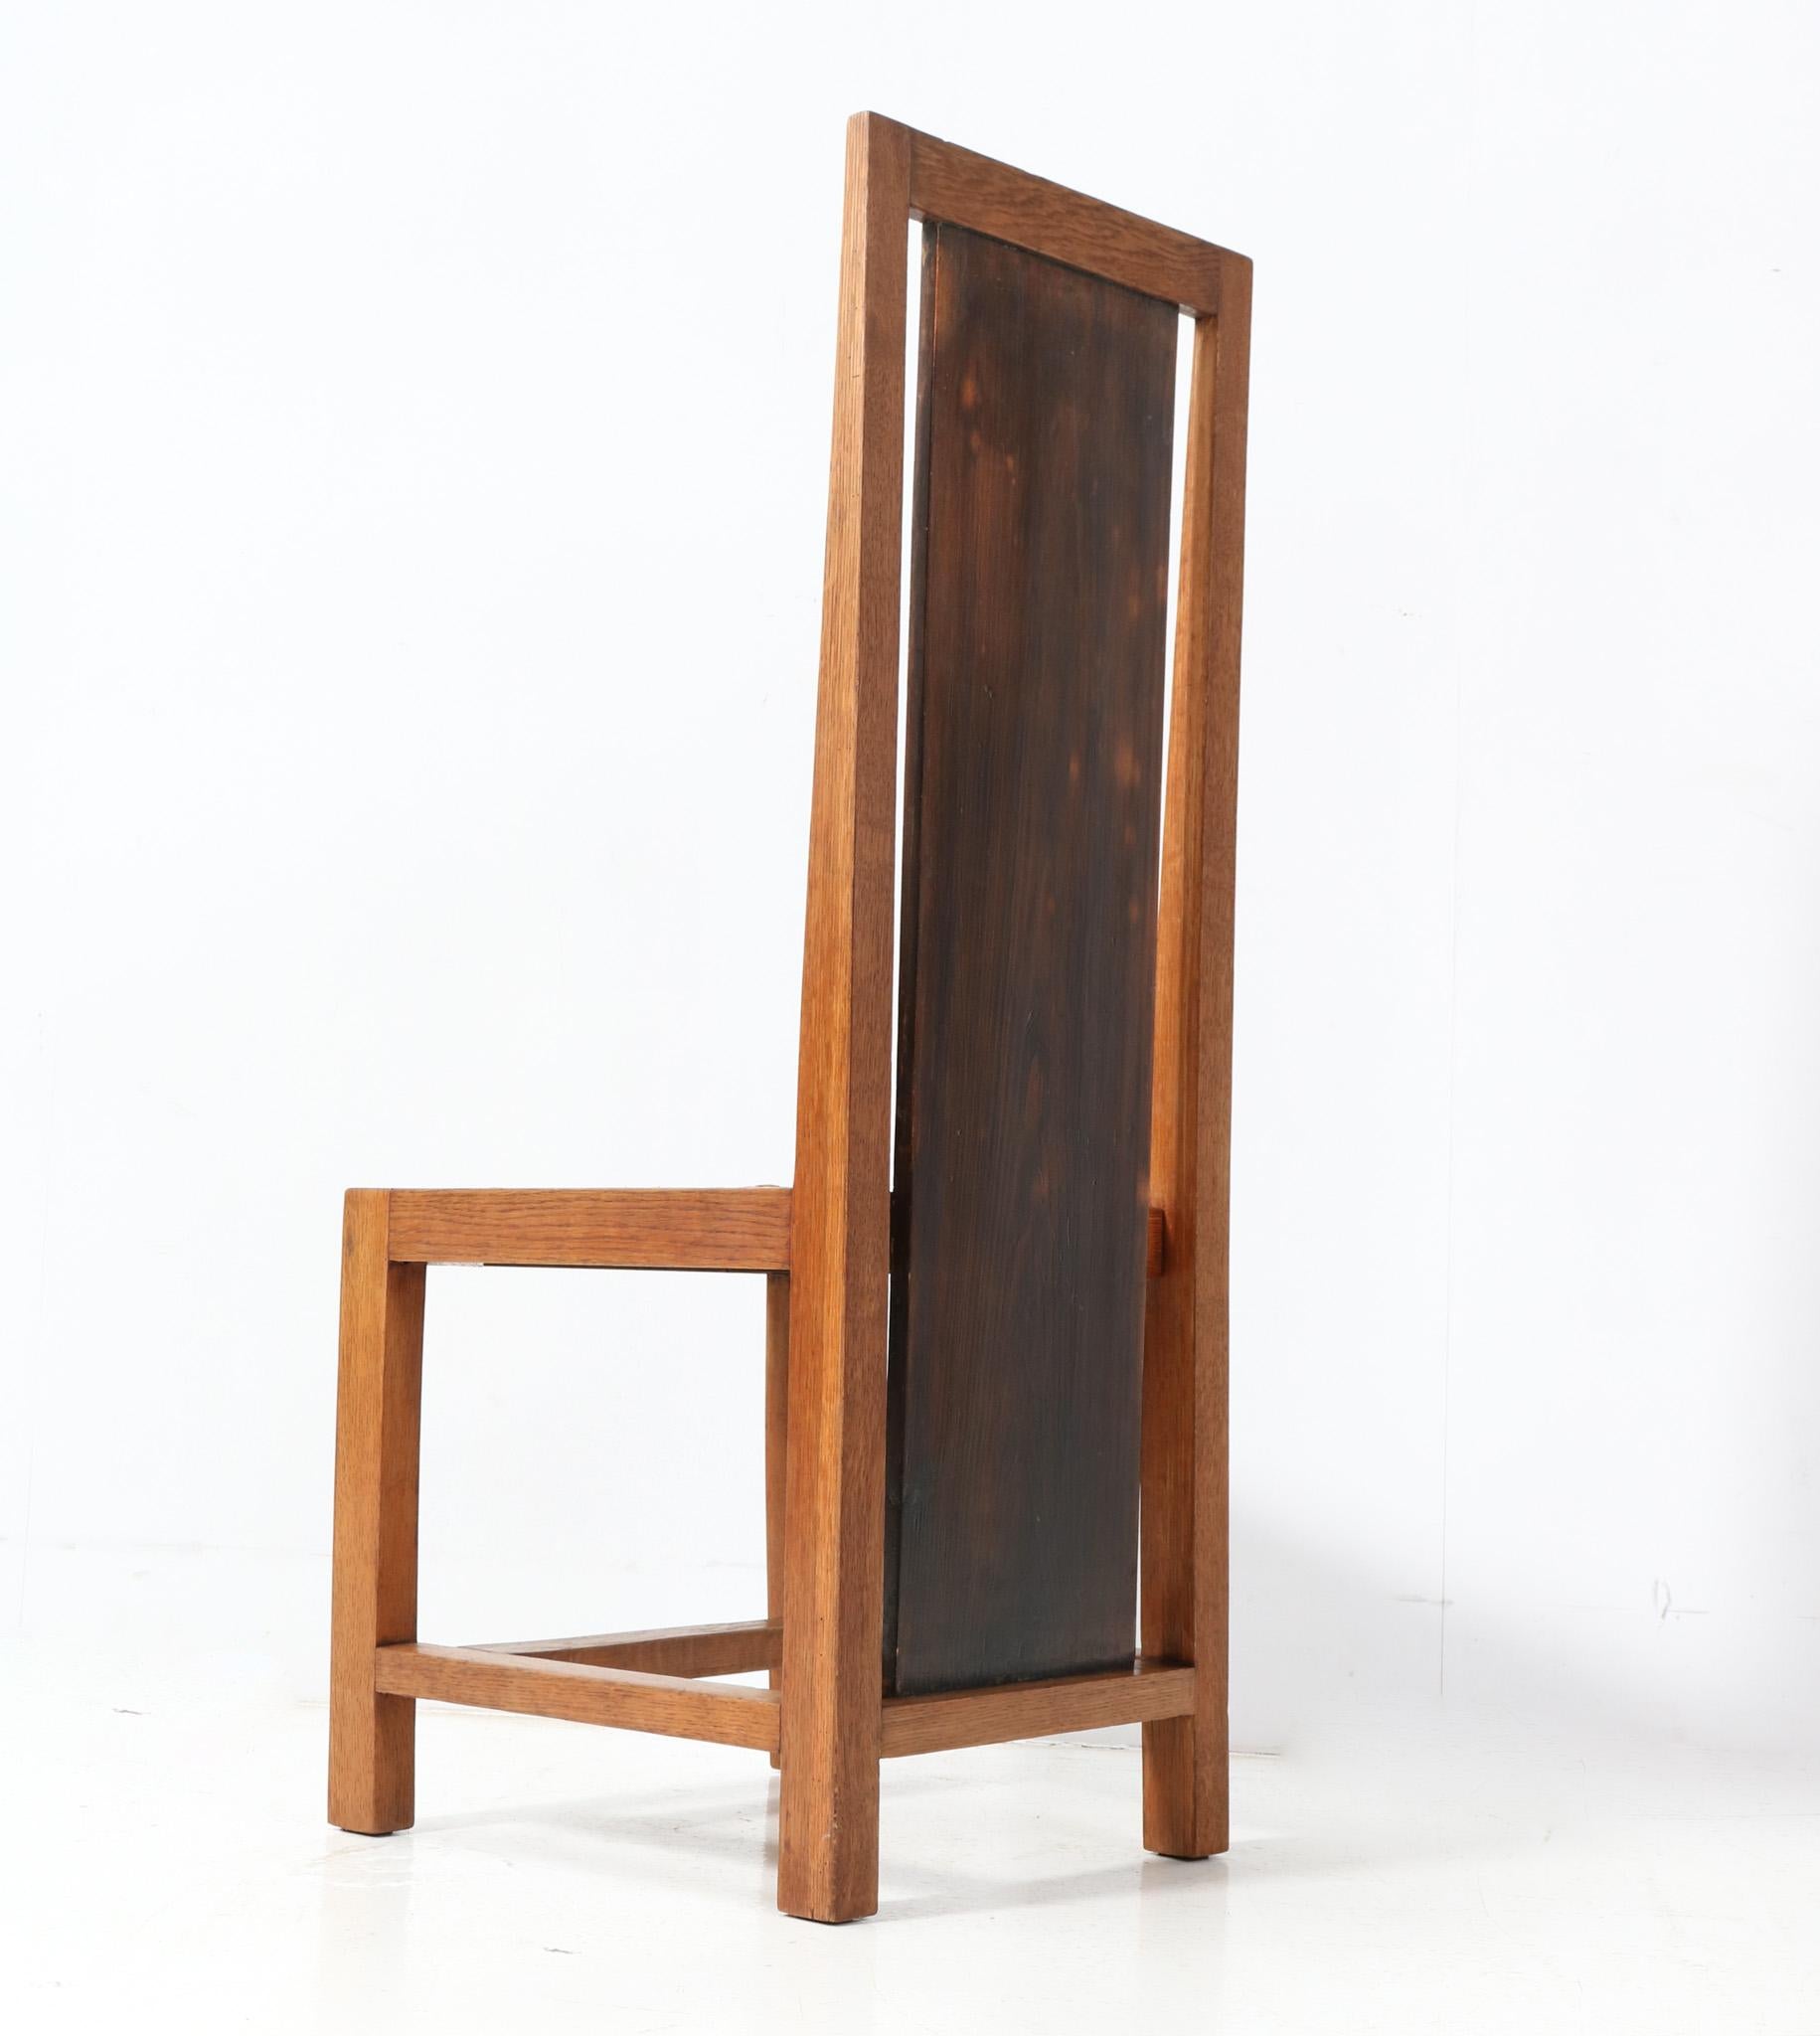  Art Deco Modernist Oak High Back Chair von Cor Alons, 1923 (Binse) im Angebot